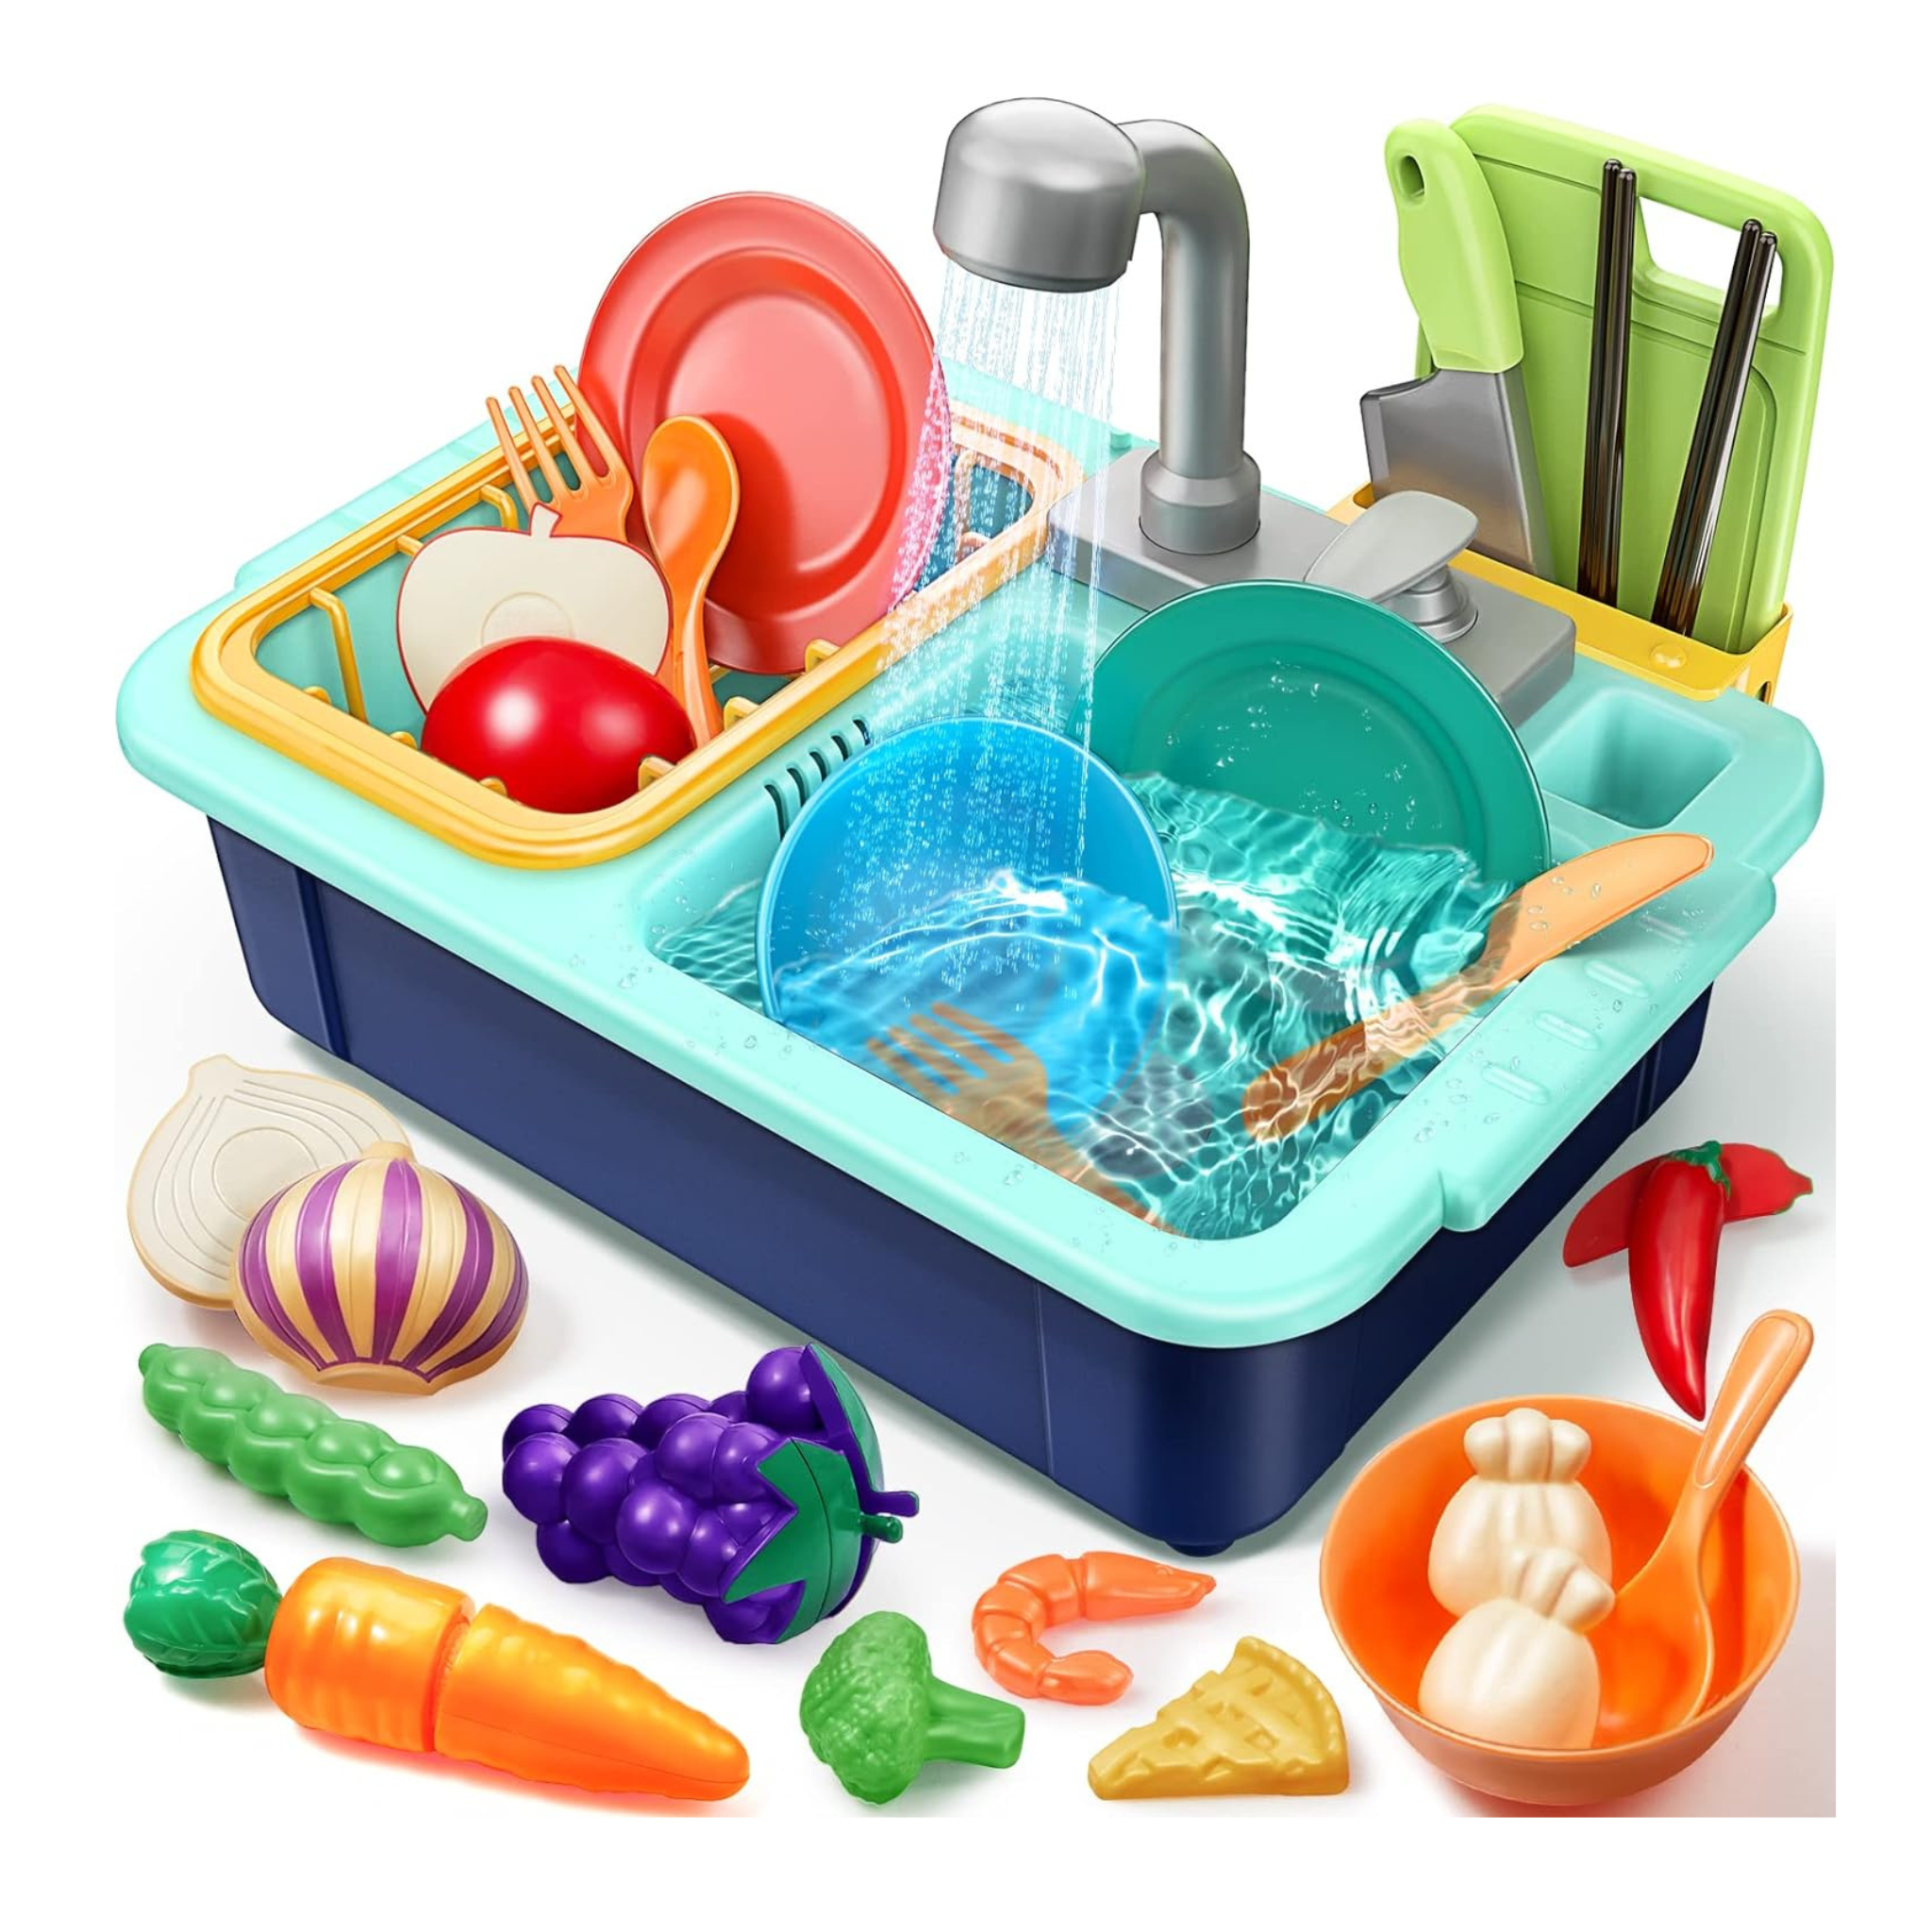 Geyiie Kitchen Play Sink Toys with Running Water